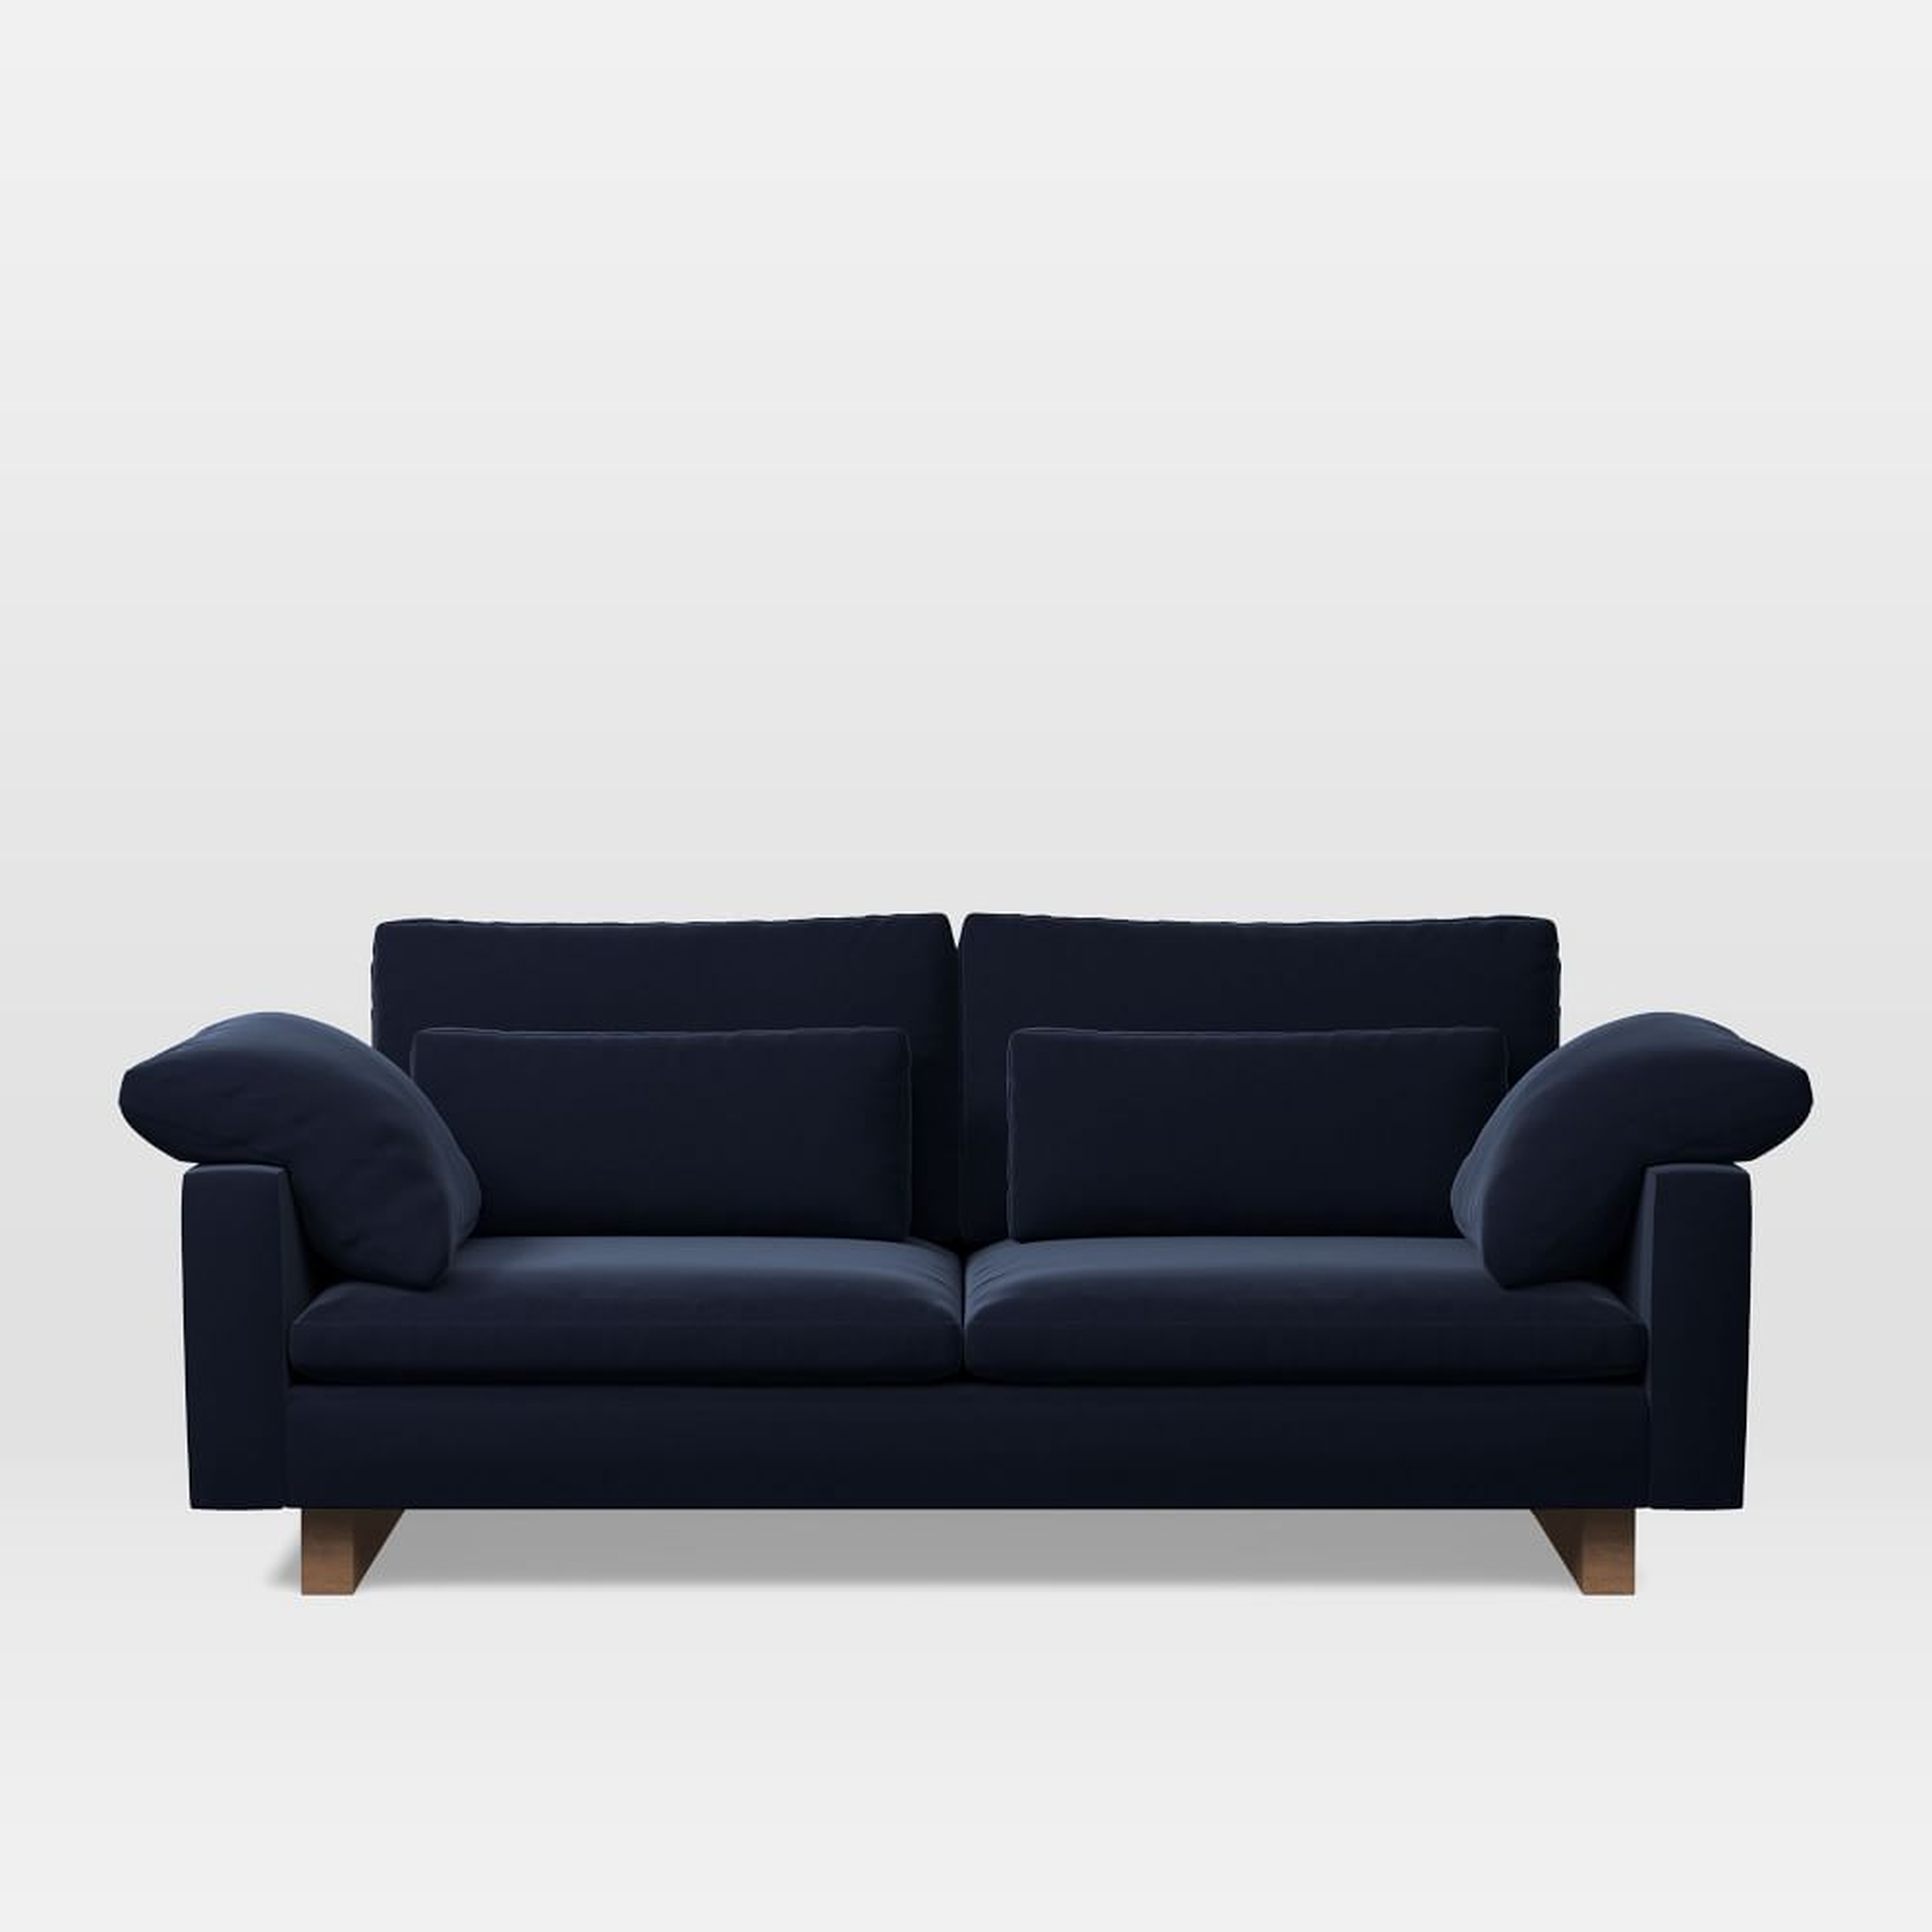 Harmony 82" Multi-Seat Sofa, Standard Depth, Distressed Velvet, Ink Blue, Dark Walnut - West Elm